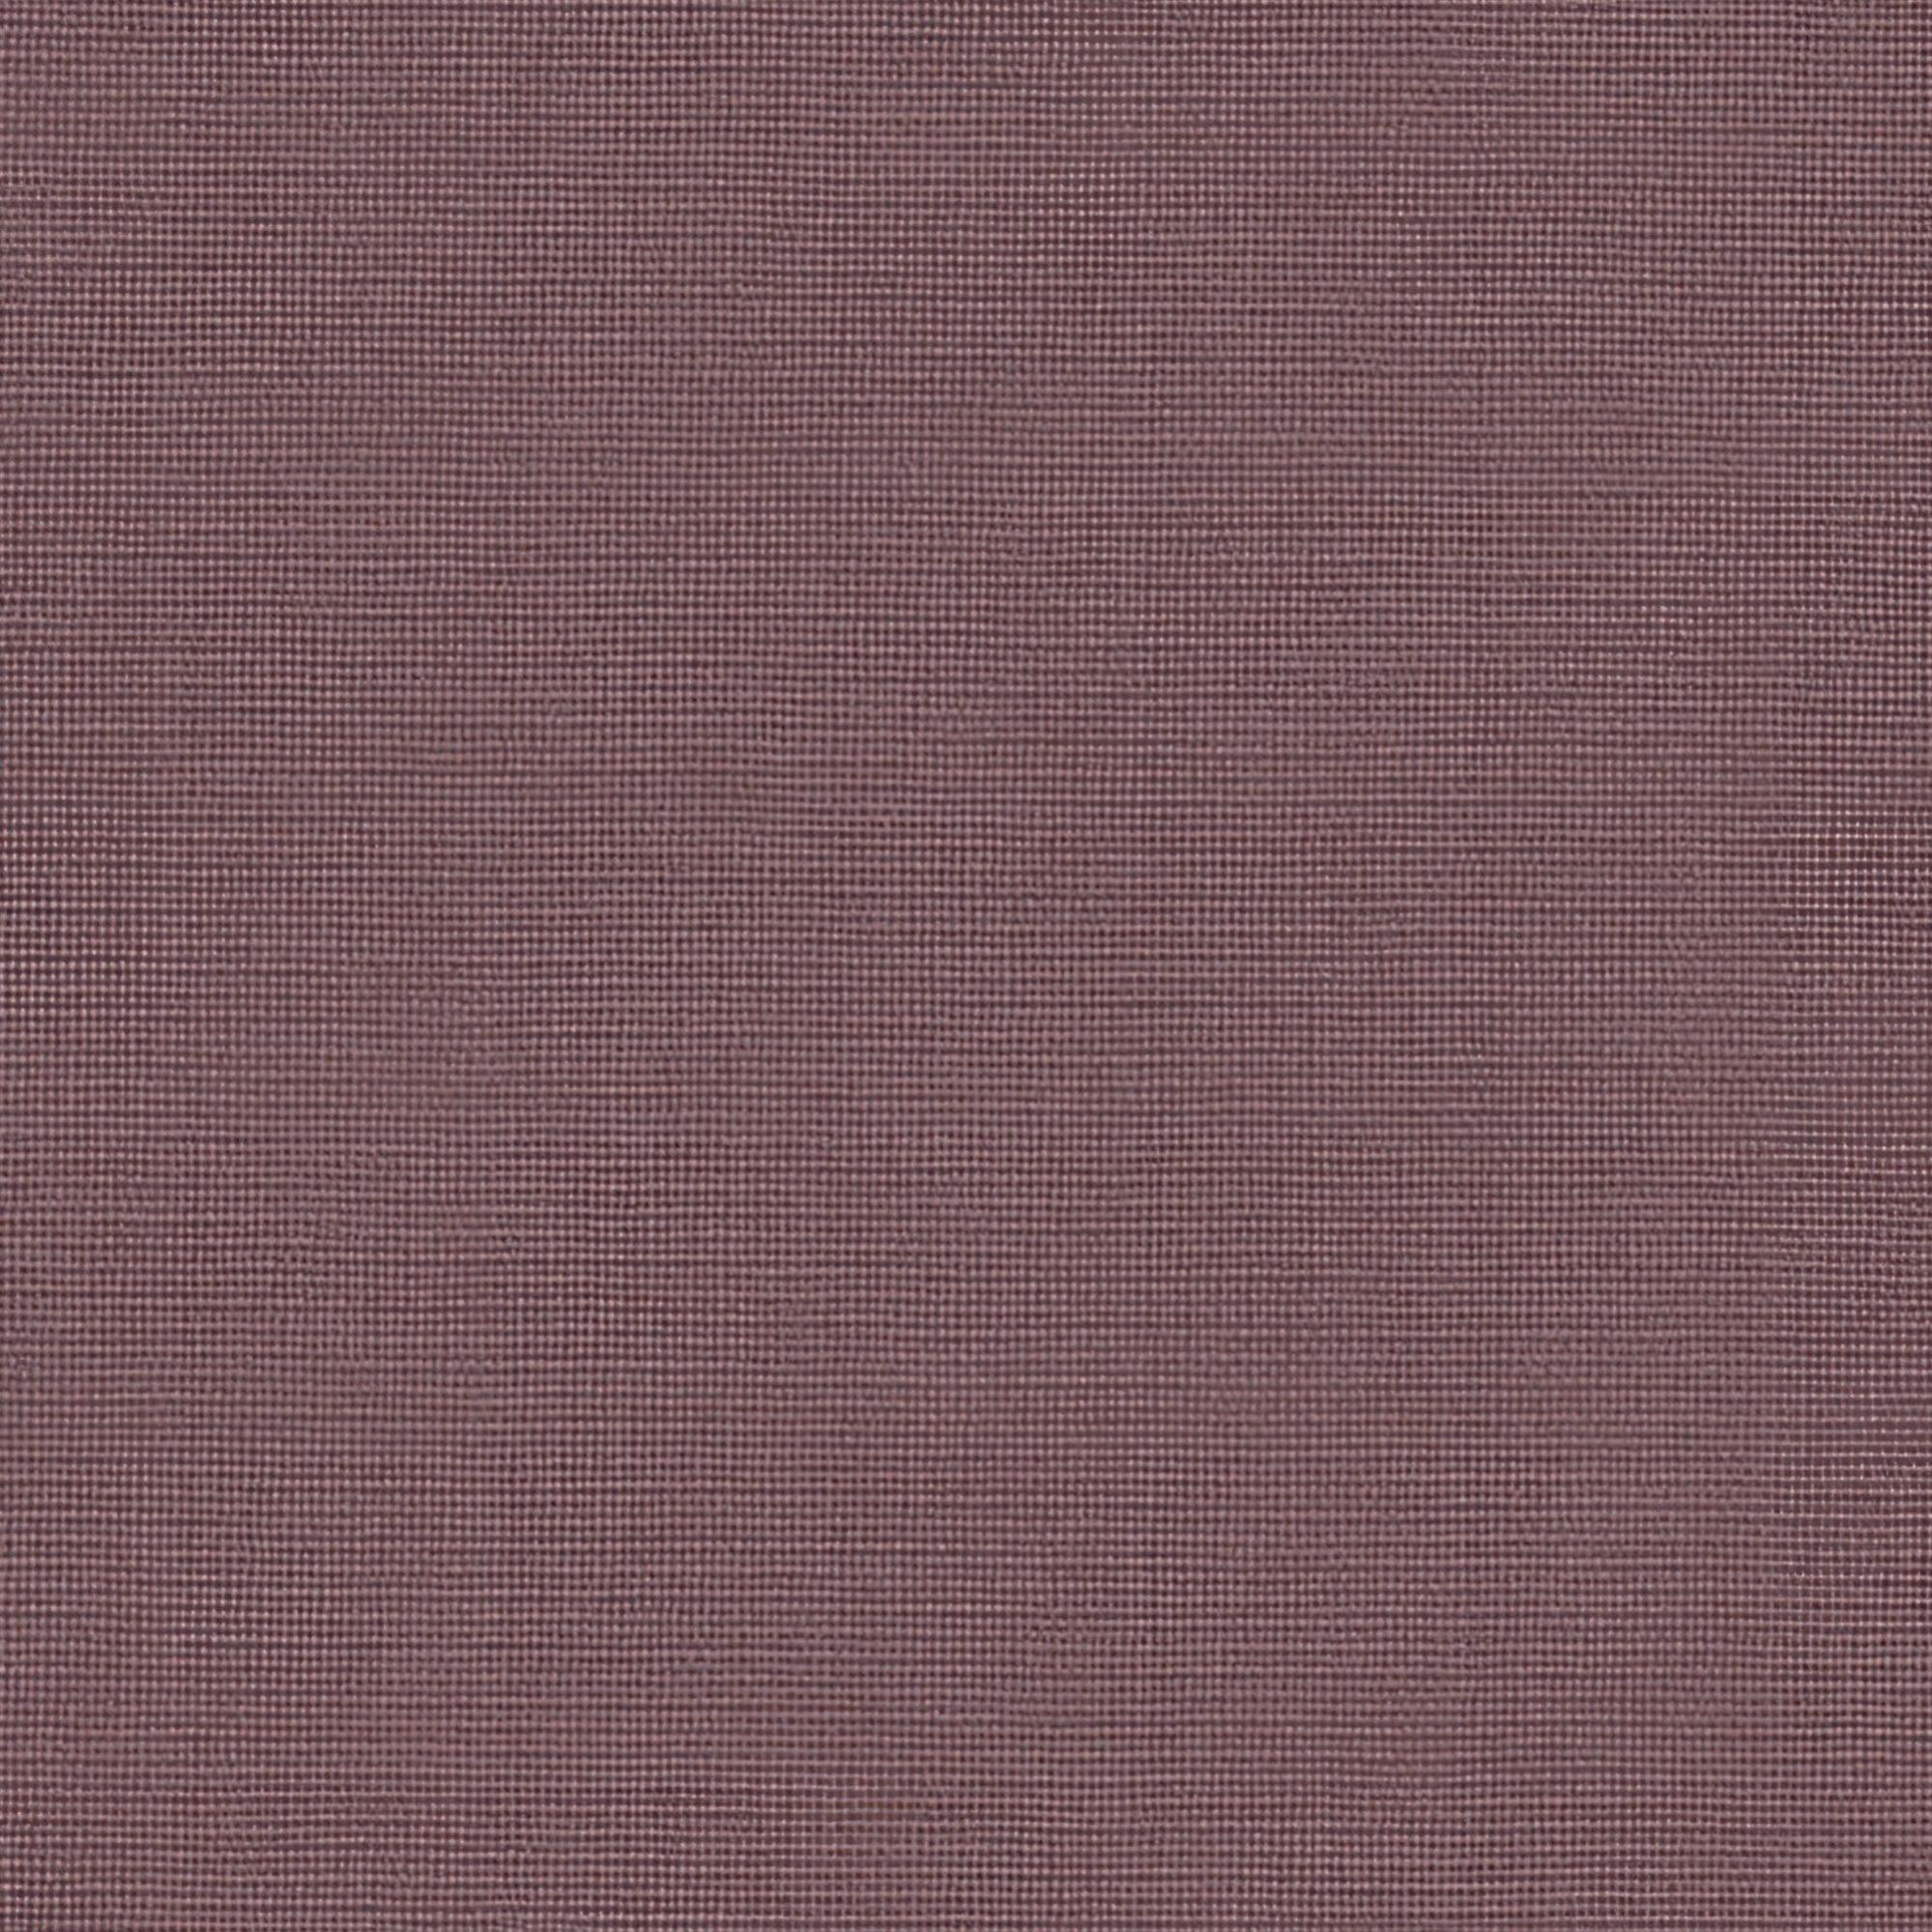 Tela al corte tapicería loneta brest morado ancho 280 cm